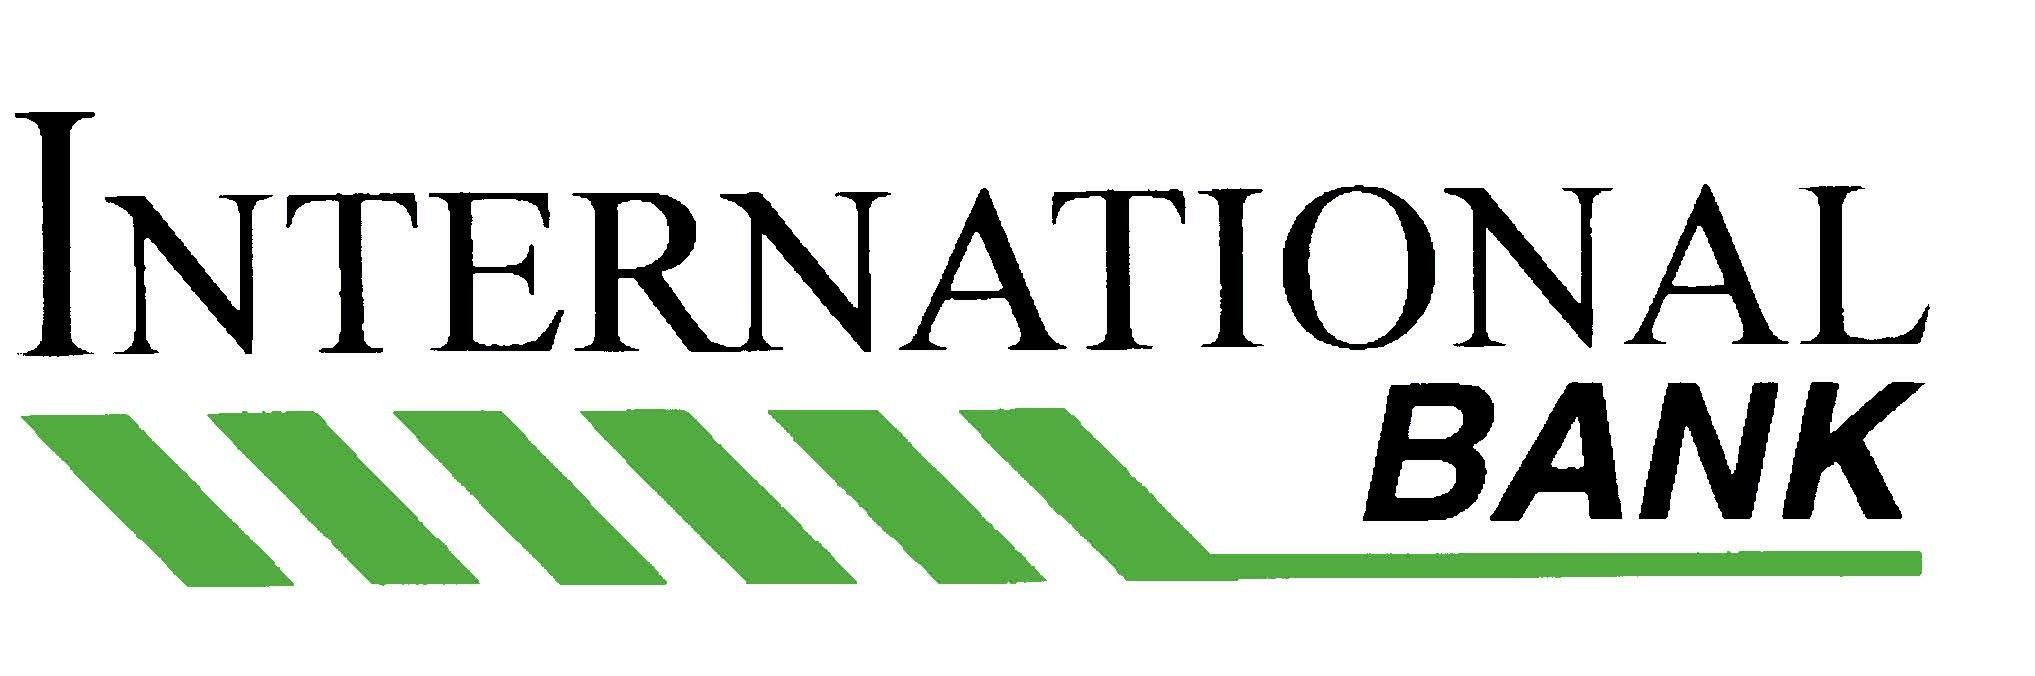 Generic Bank Logo - INTERNATIONAL BANKS CONTROL THE WORLD ECONOMY | uldissprogis